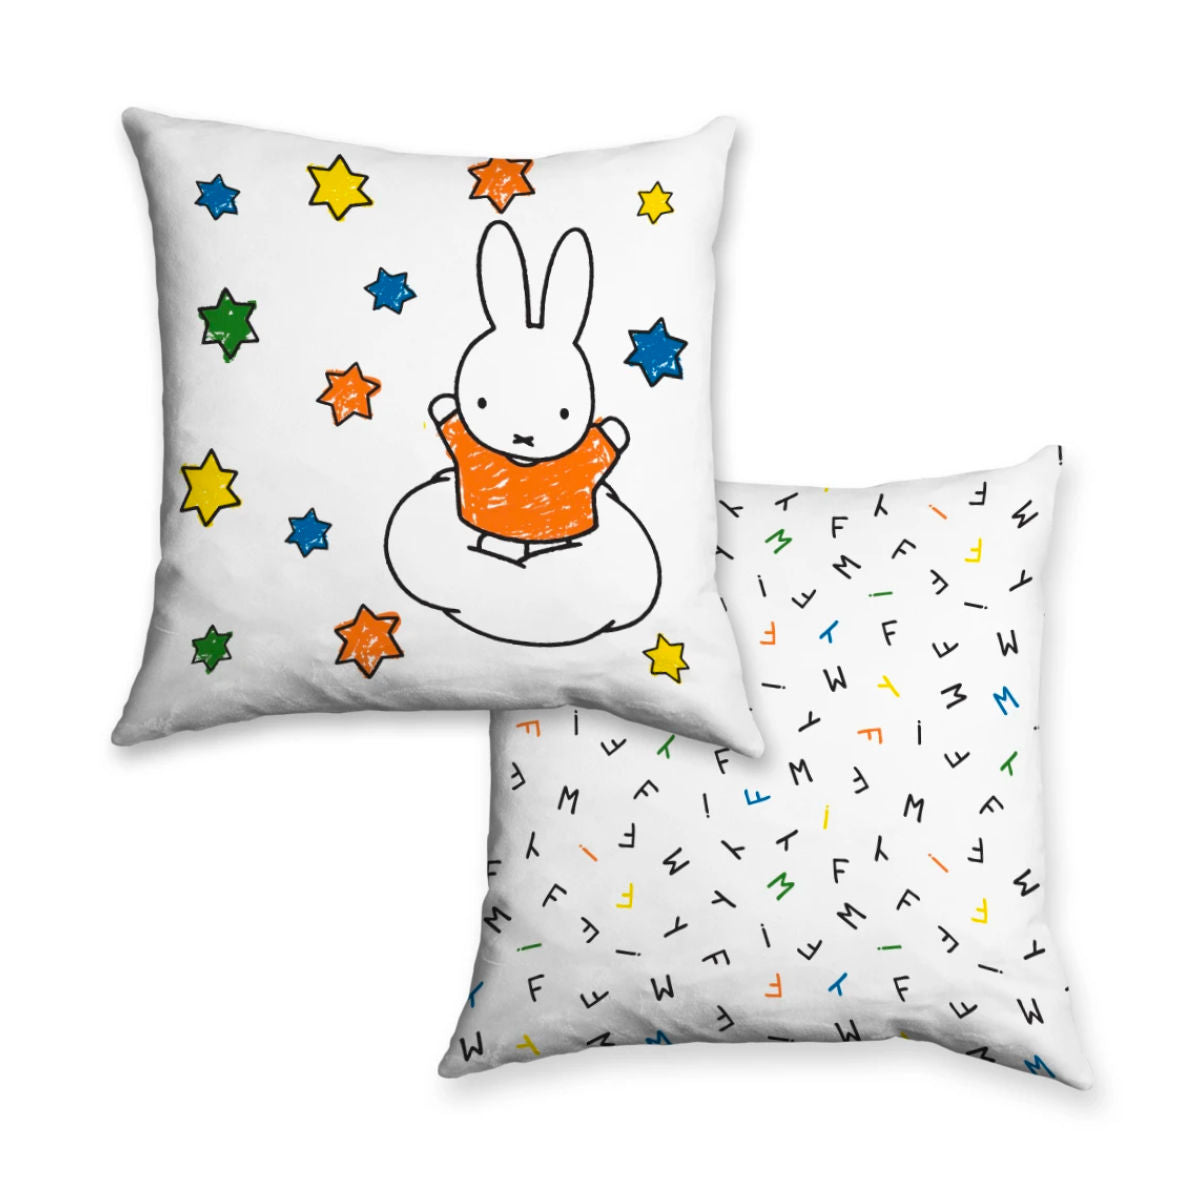 Miffy Cushion, stars